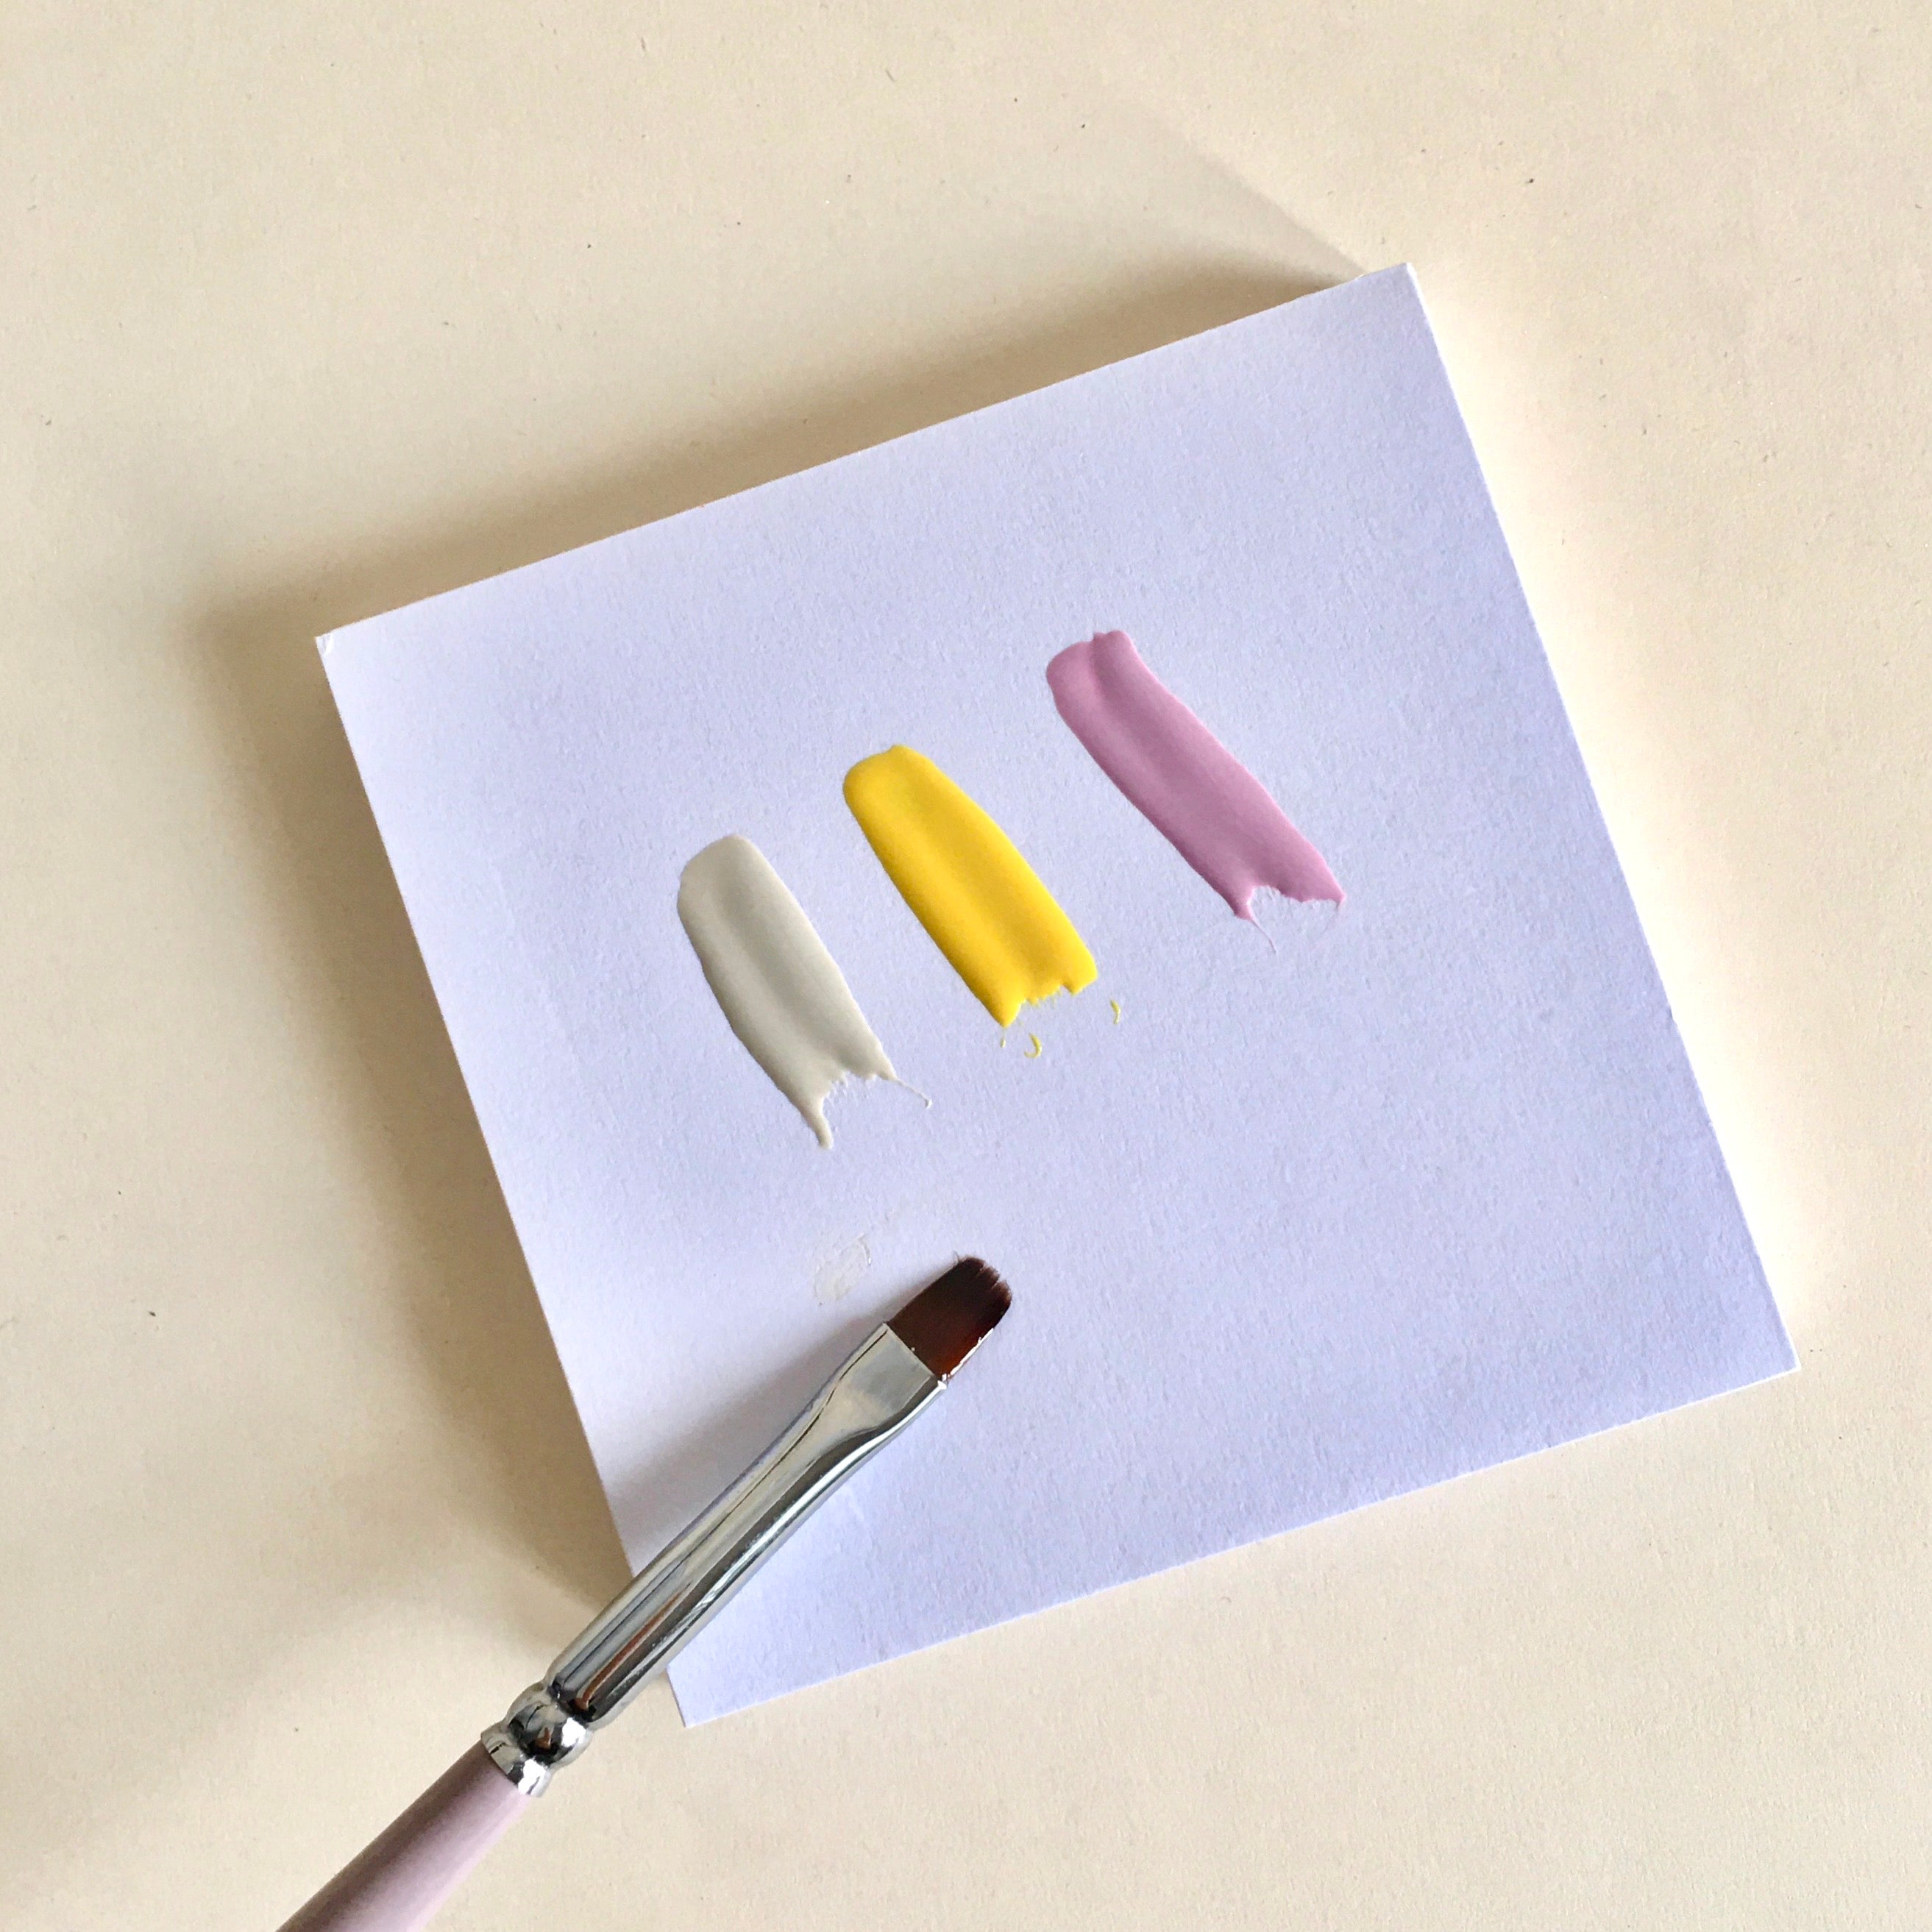 Nail Color Palette Paper Waterproof- Pack of 2